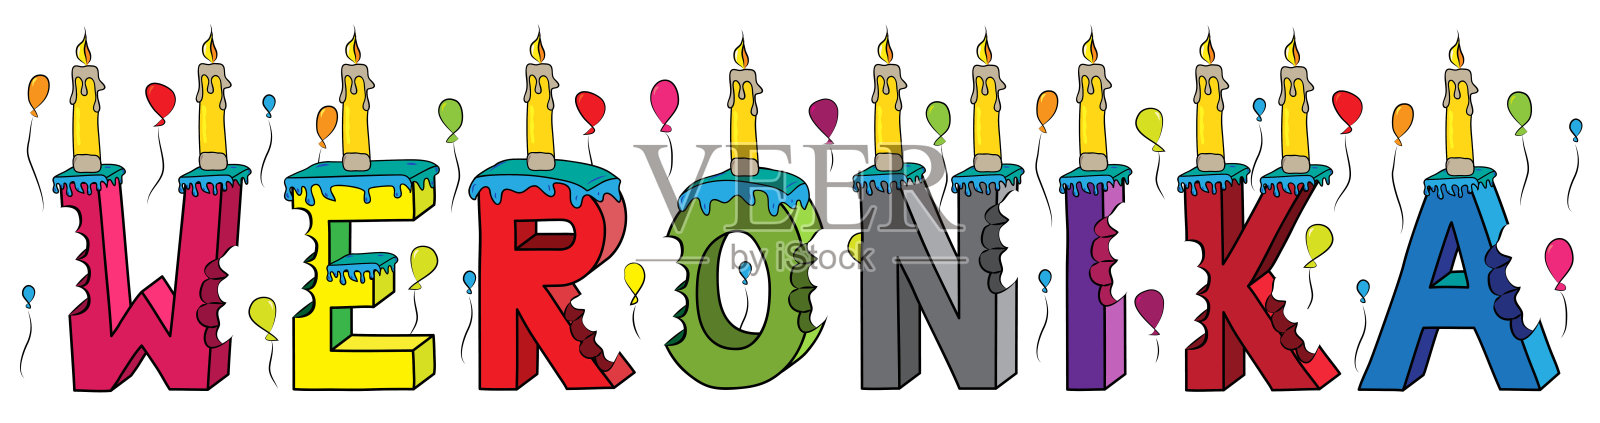 Weronika女名咬彩色3d字母生日蛋糕蜡烛和气球插画图片素材